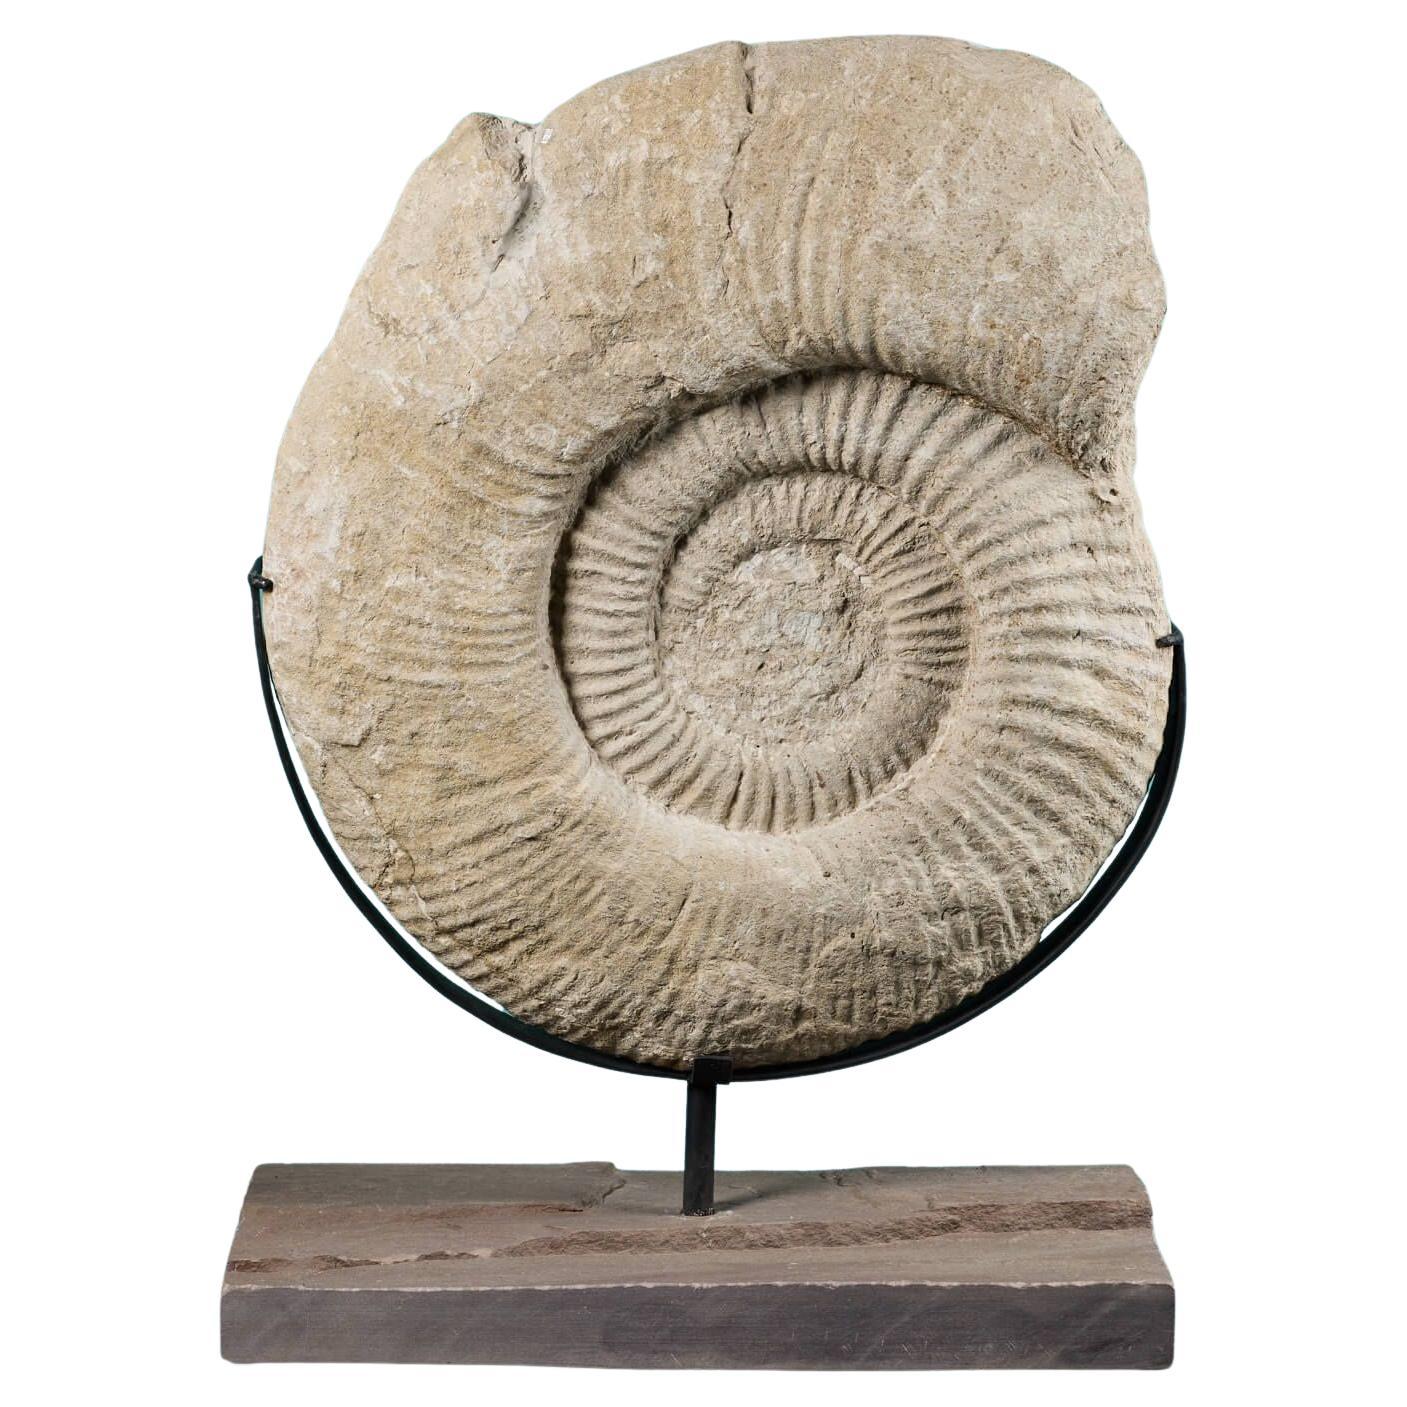 Fossile d'ammonite titanite géante sur Stand